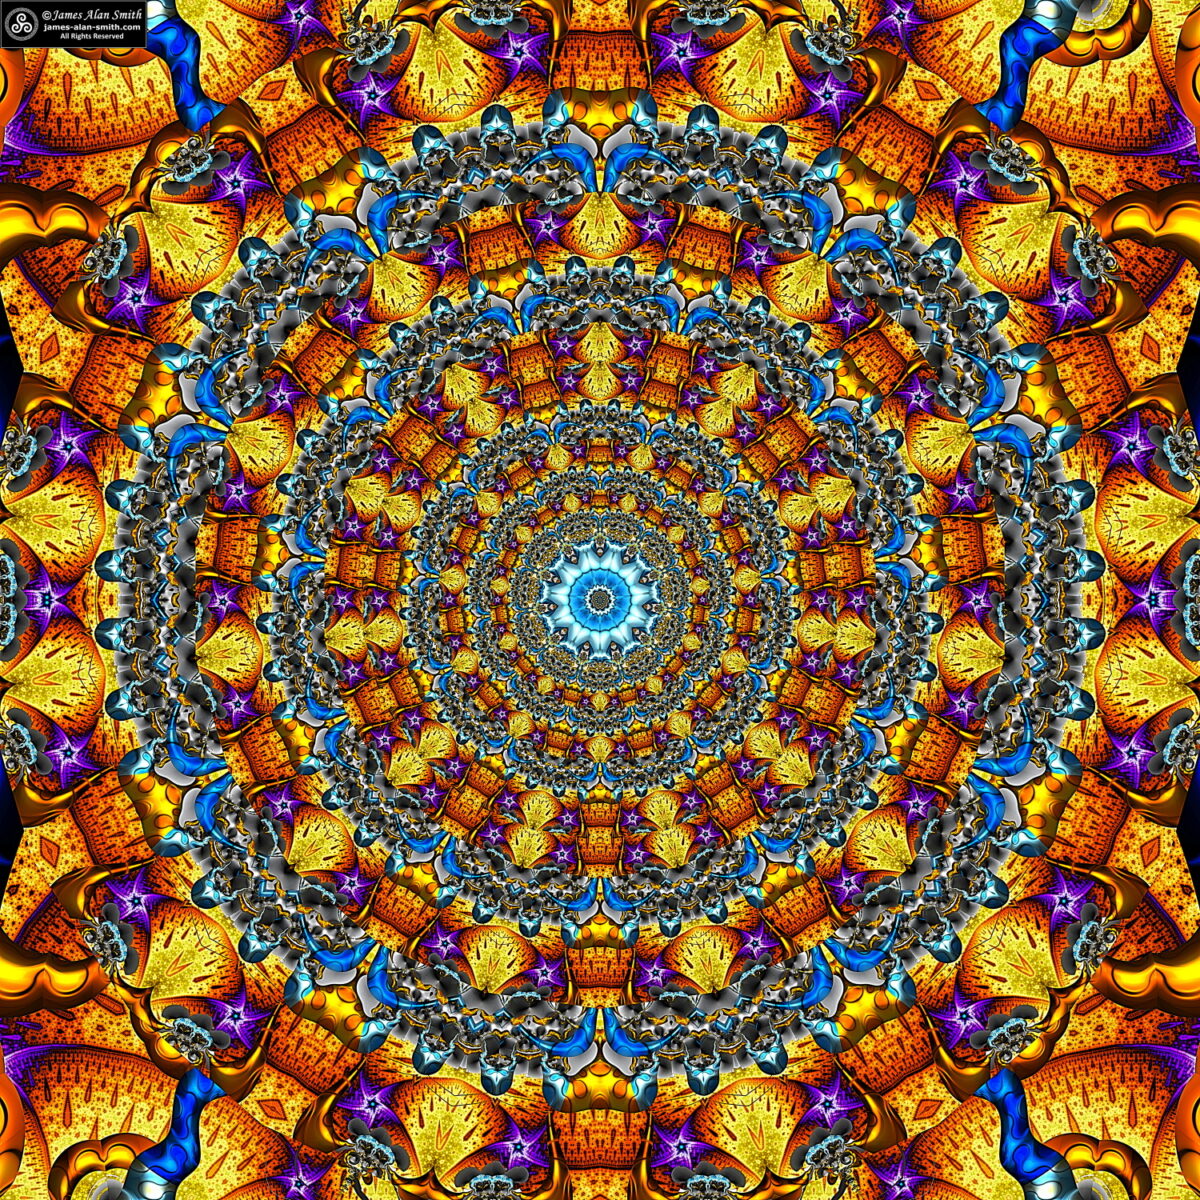 Encircled Star Mandala: Artwork by James Alan Smith